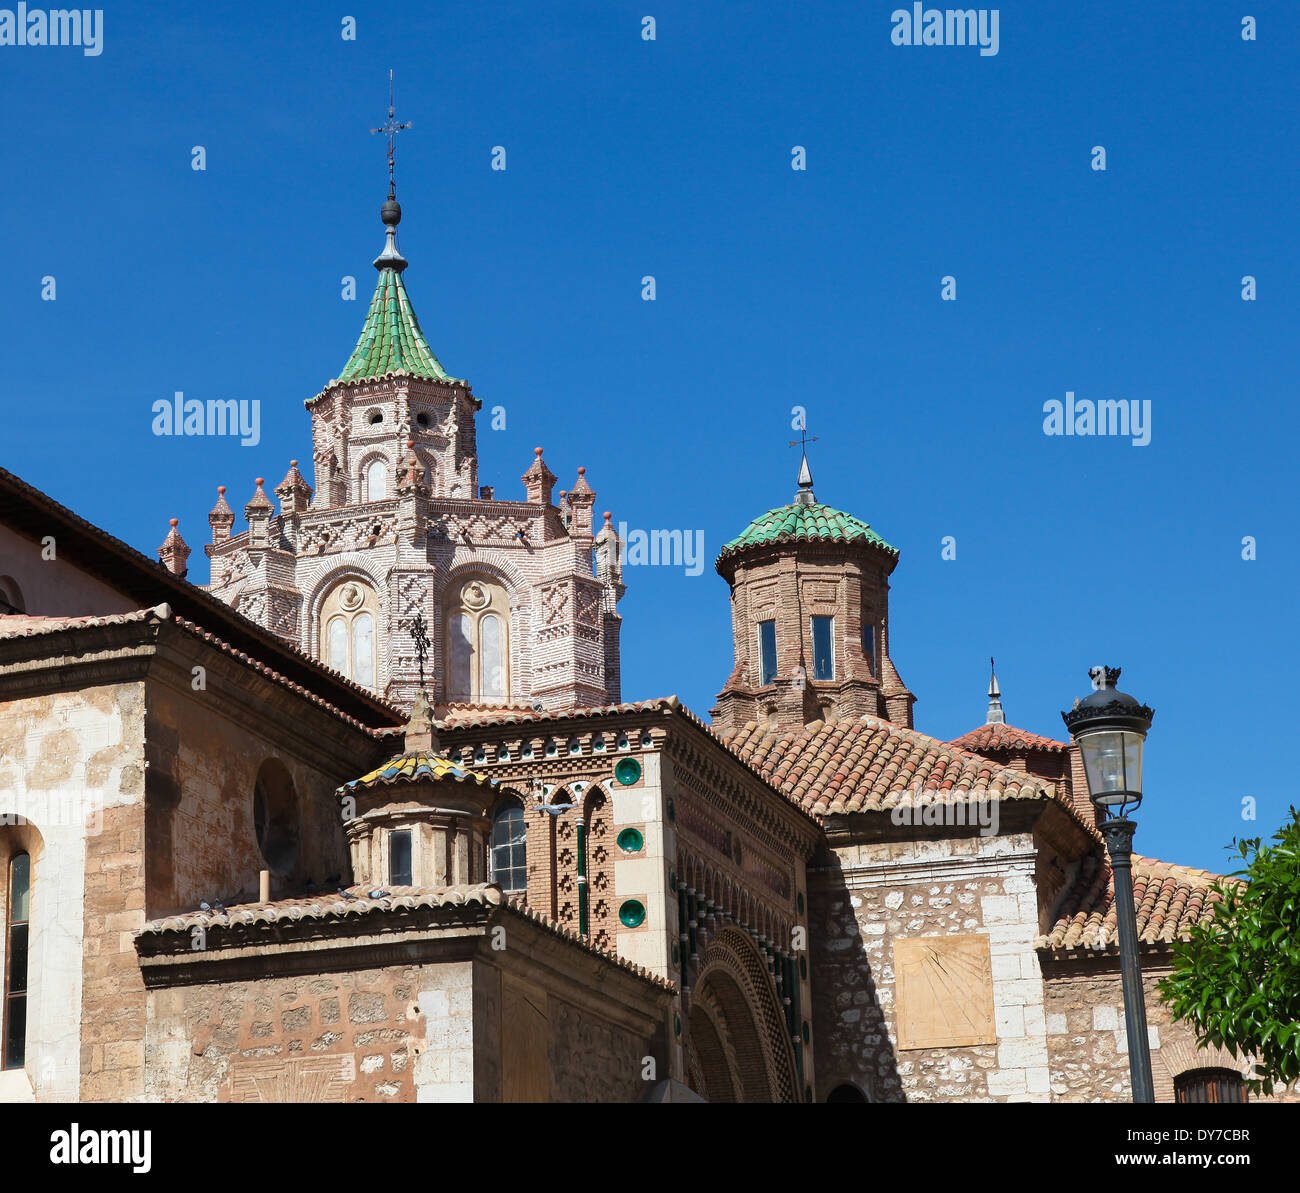 Típica arquitectura mudéjar de Teruel, Aragón, España oriental. Foto de stock